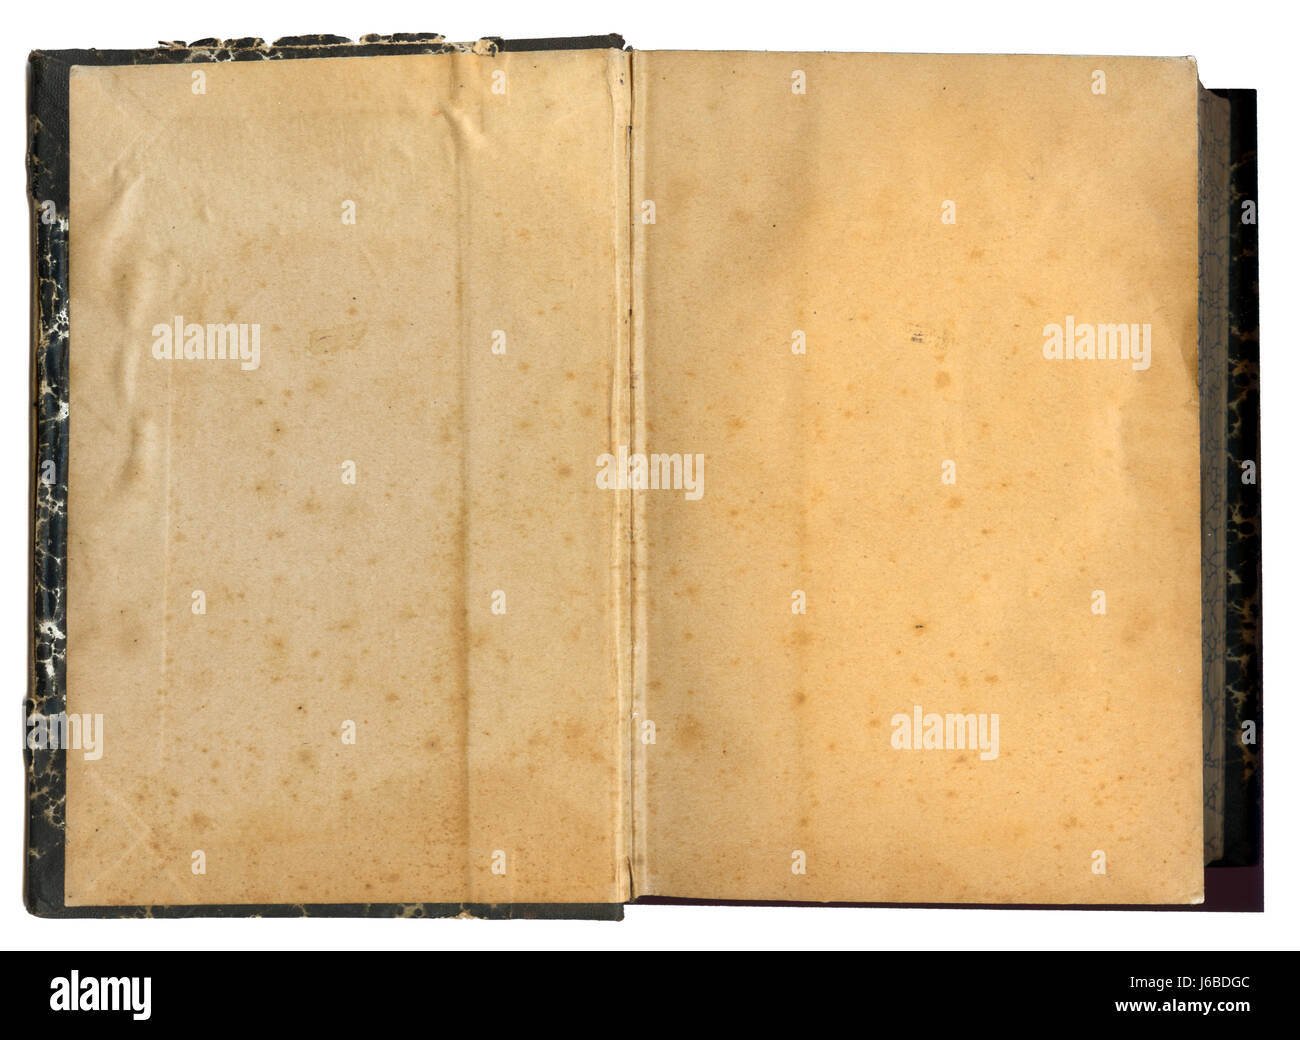 Deckblatt der Oberfläche Buch Papier Papier Buch Textur braun bräunlich Brünette Stockfoto